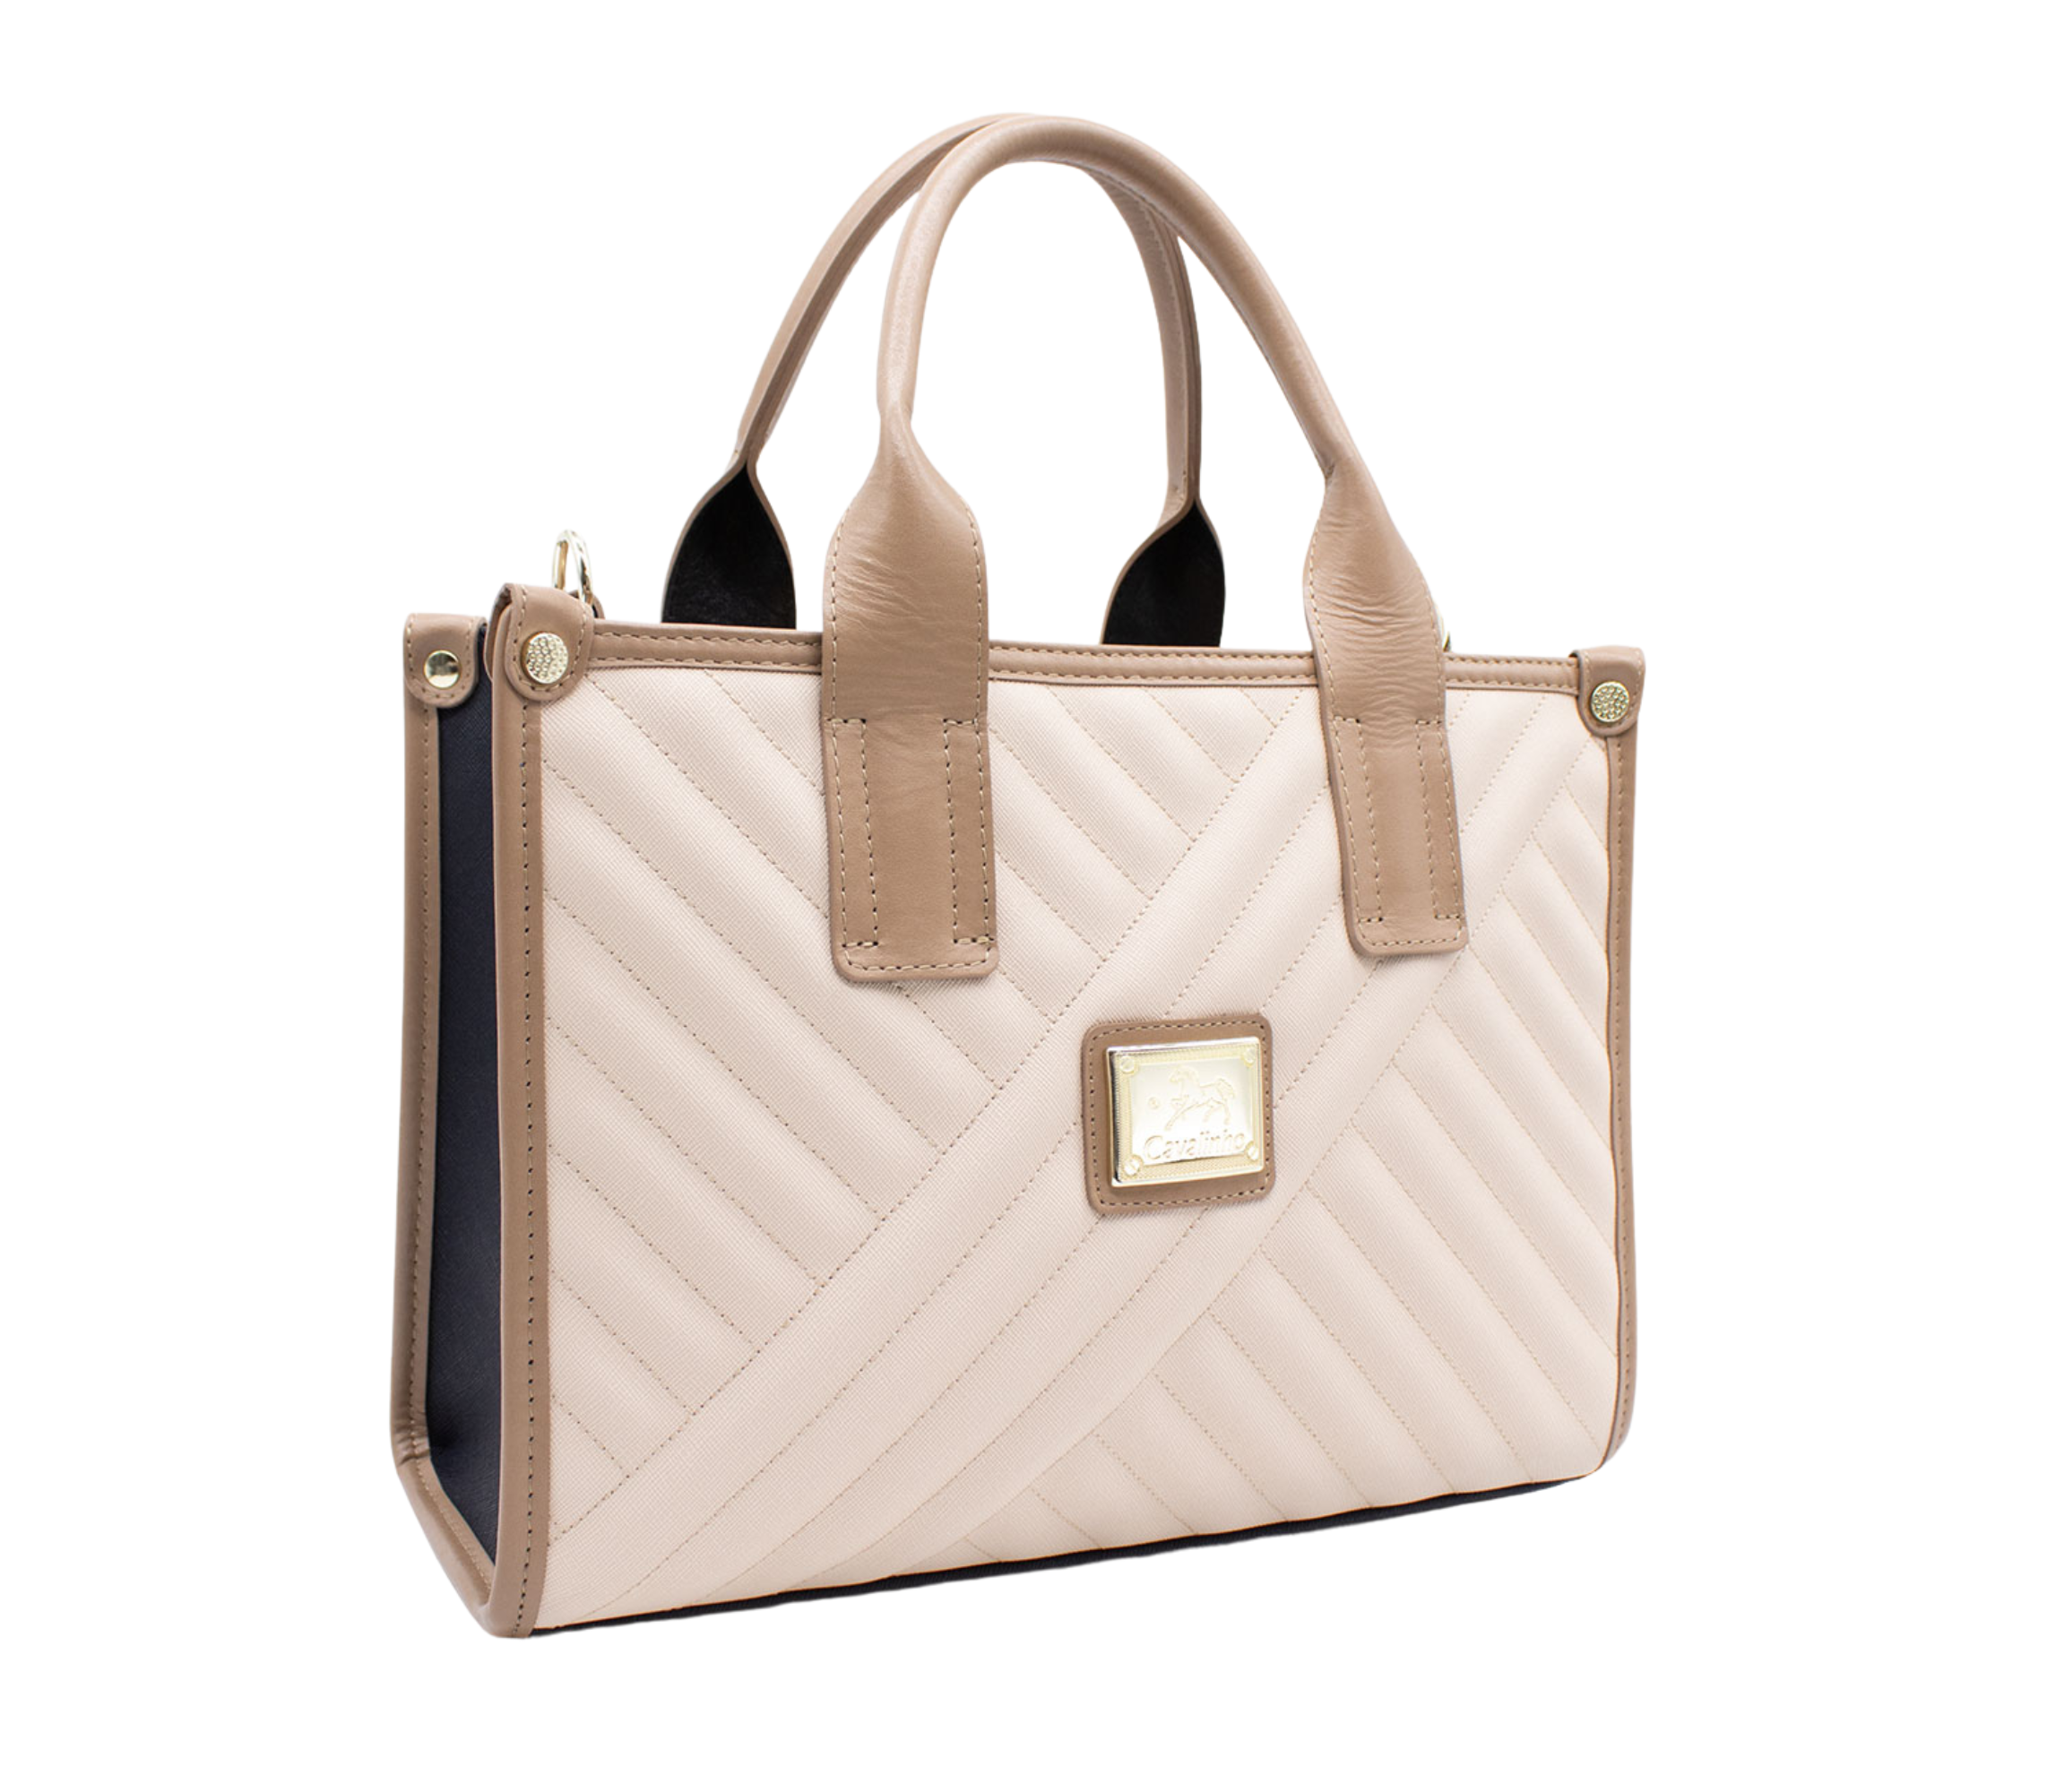 Cavalinho Charming Handbag SKU 18470479.22 #color_navy / tan / beige